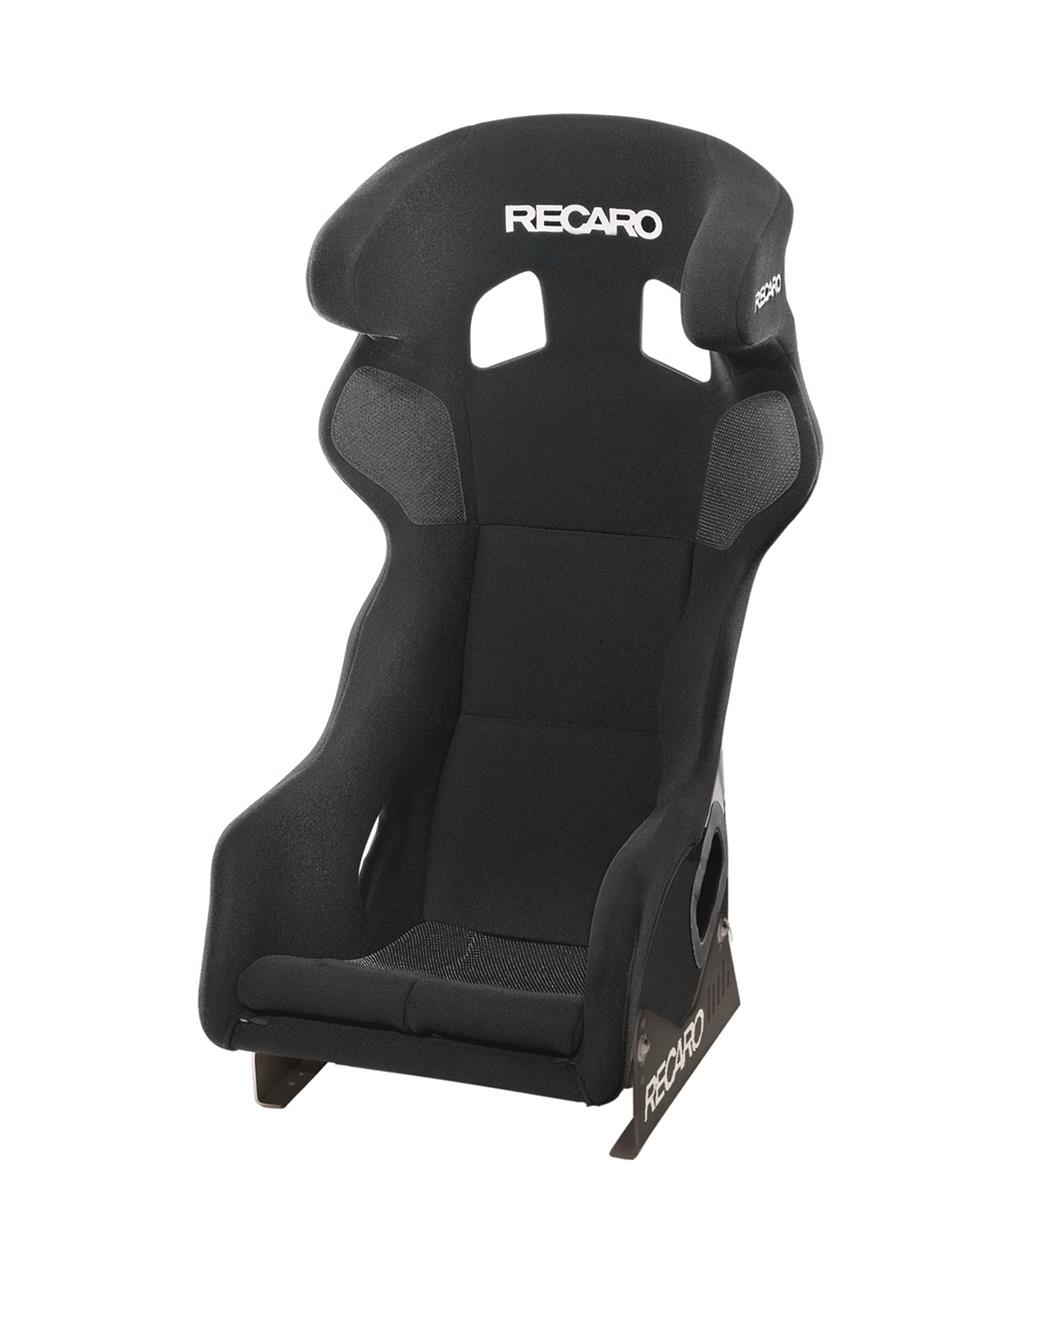 Recaro Pro Racer XL Seat - Black Velour/Black Velour